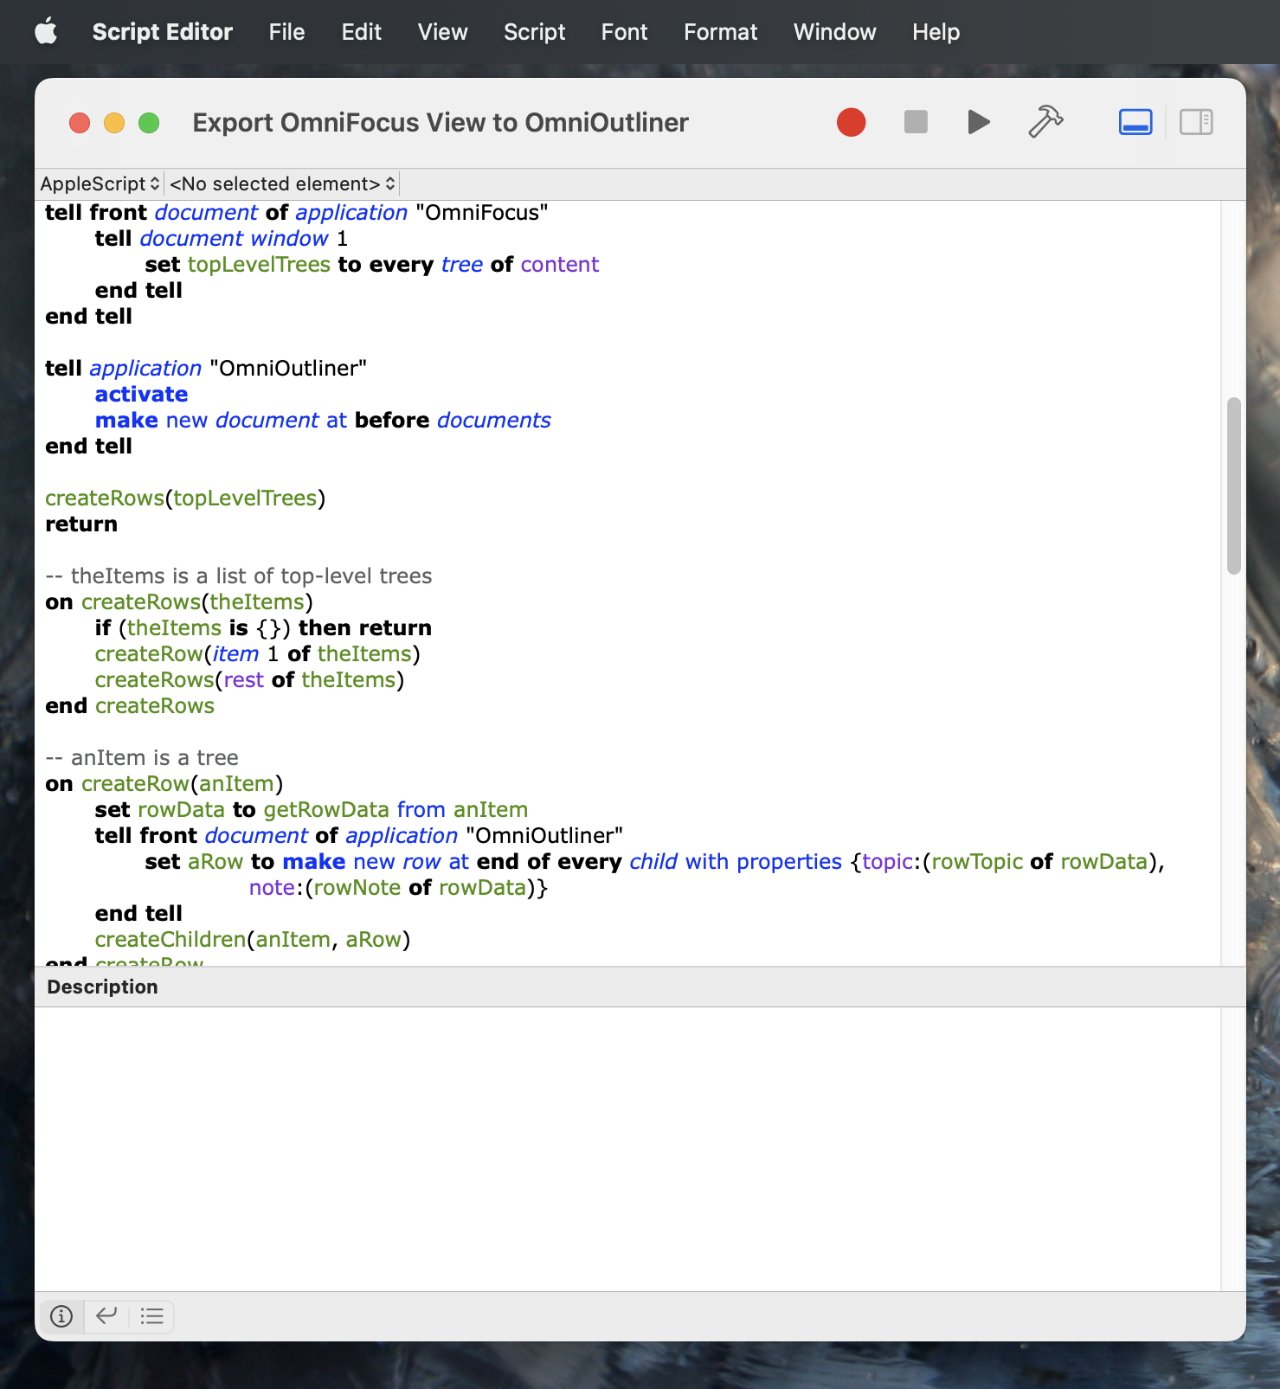 AppleScript (example script by Curtis Clifton)